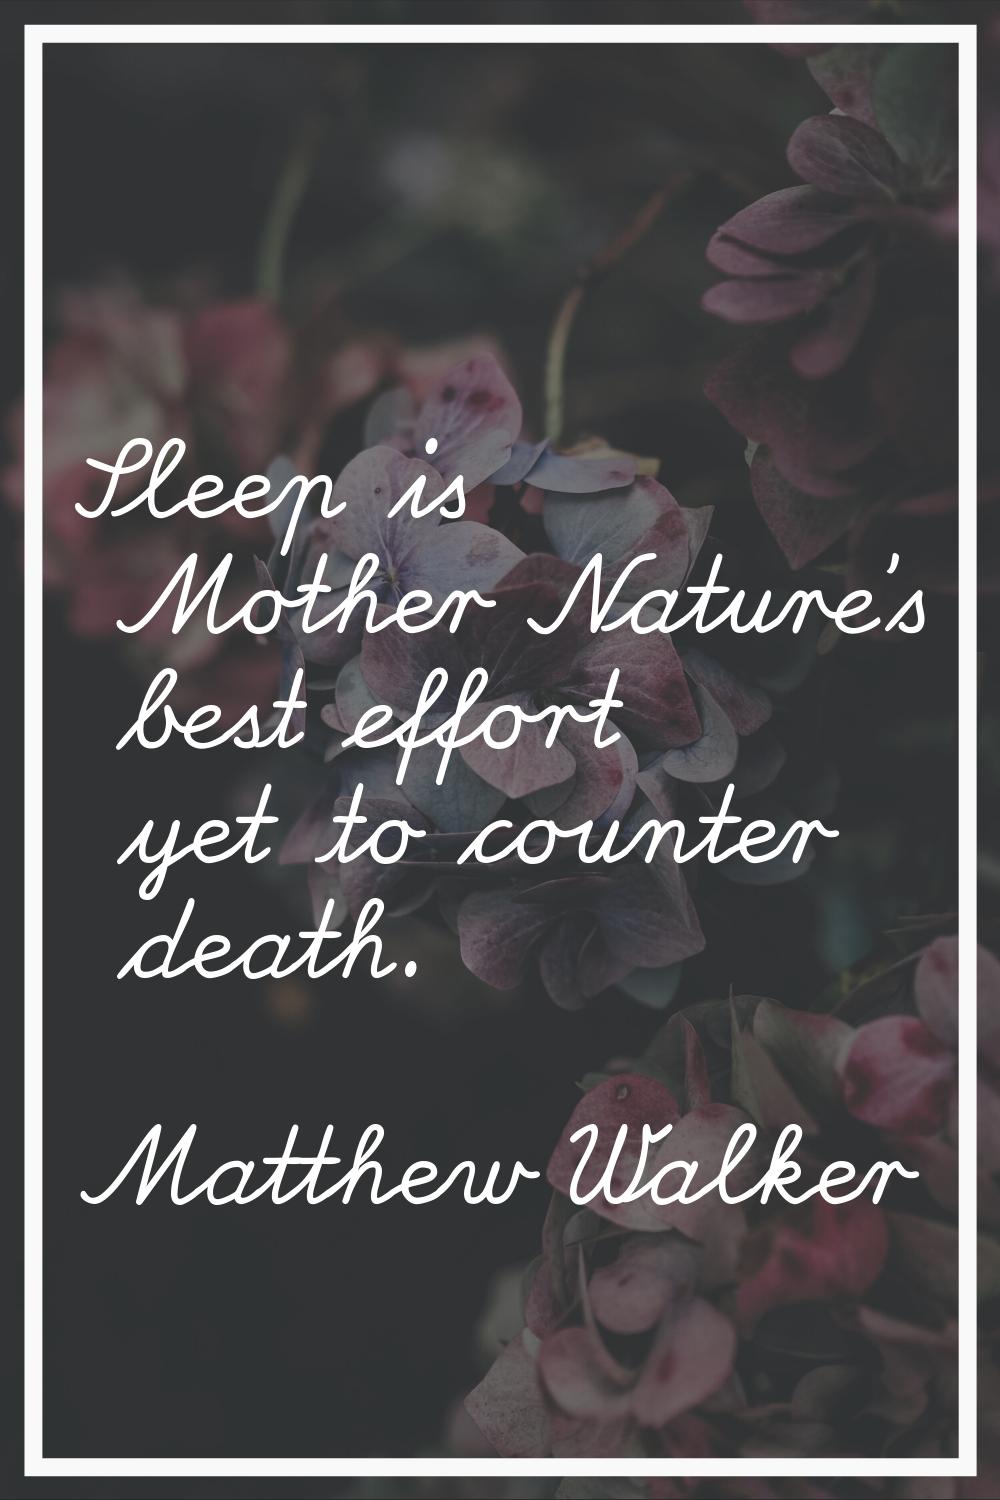 Sleep is Mother Nature's best effort yet to counter death.